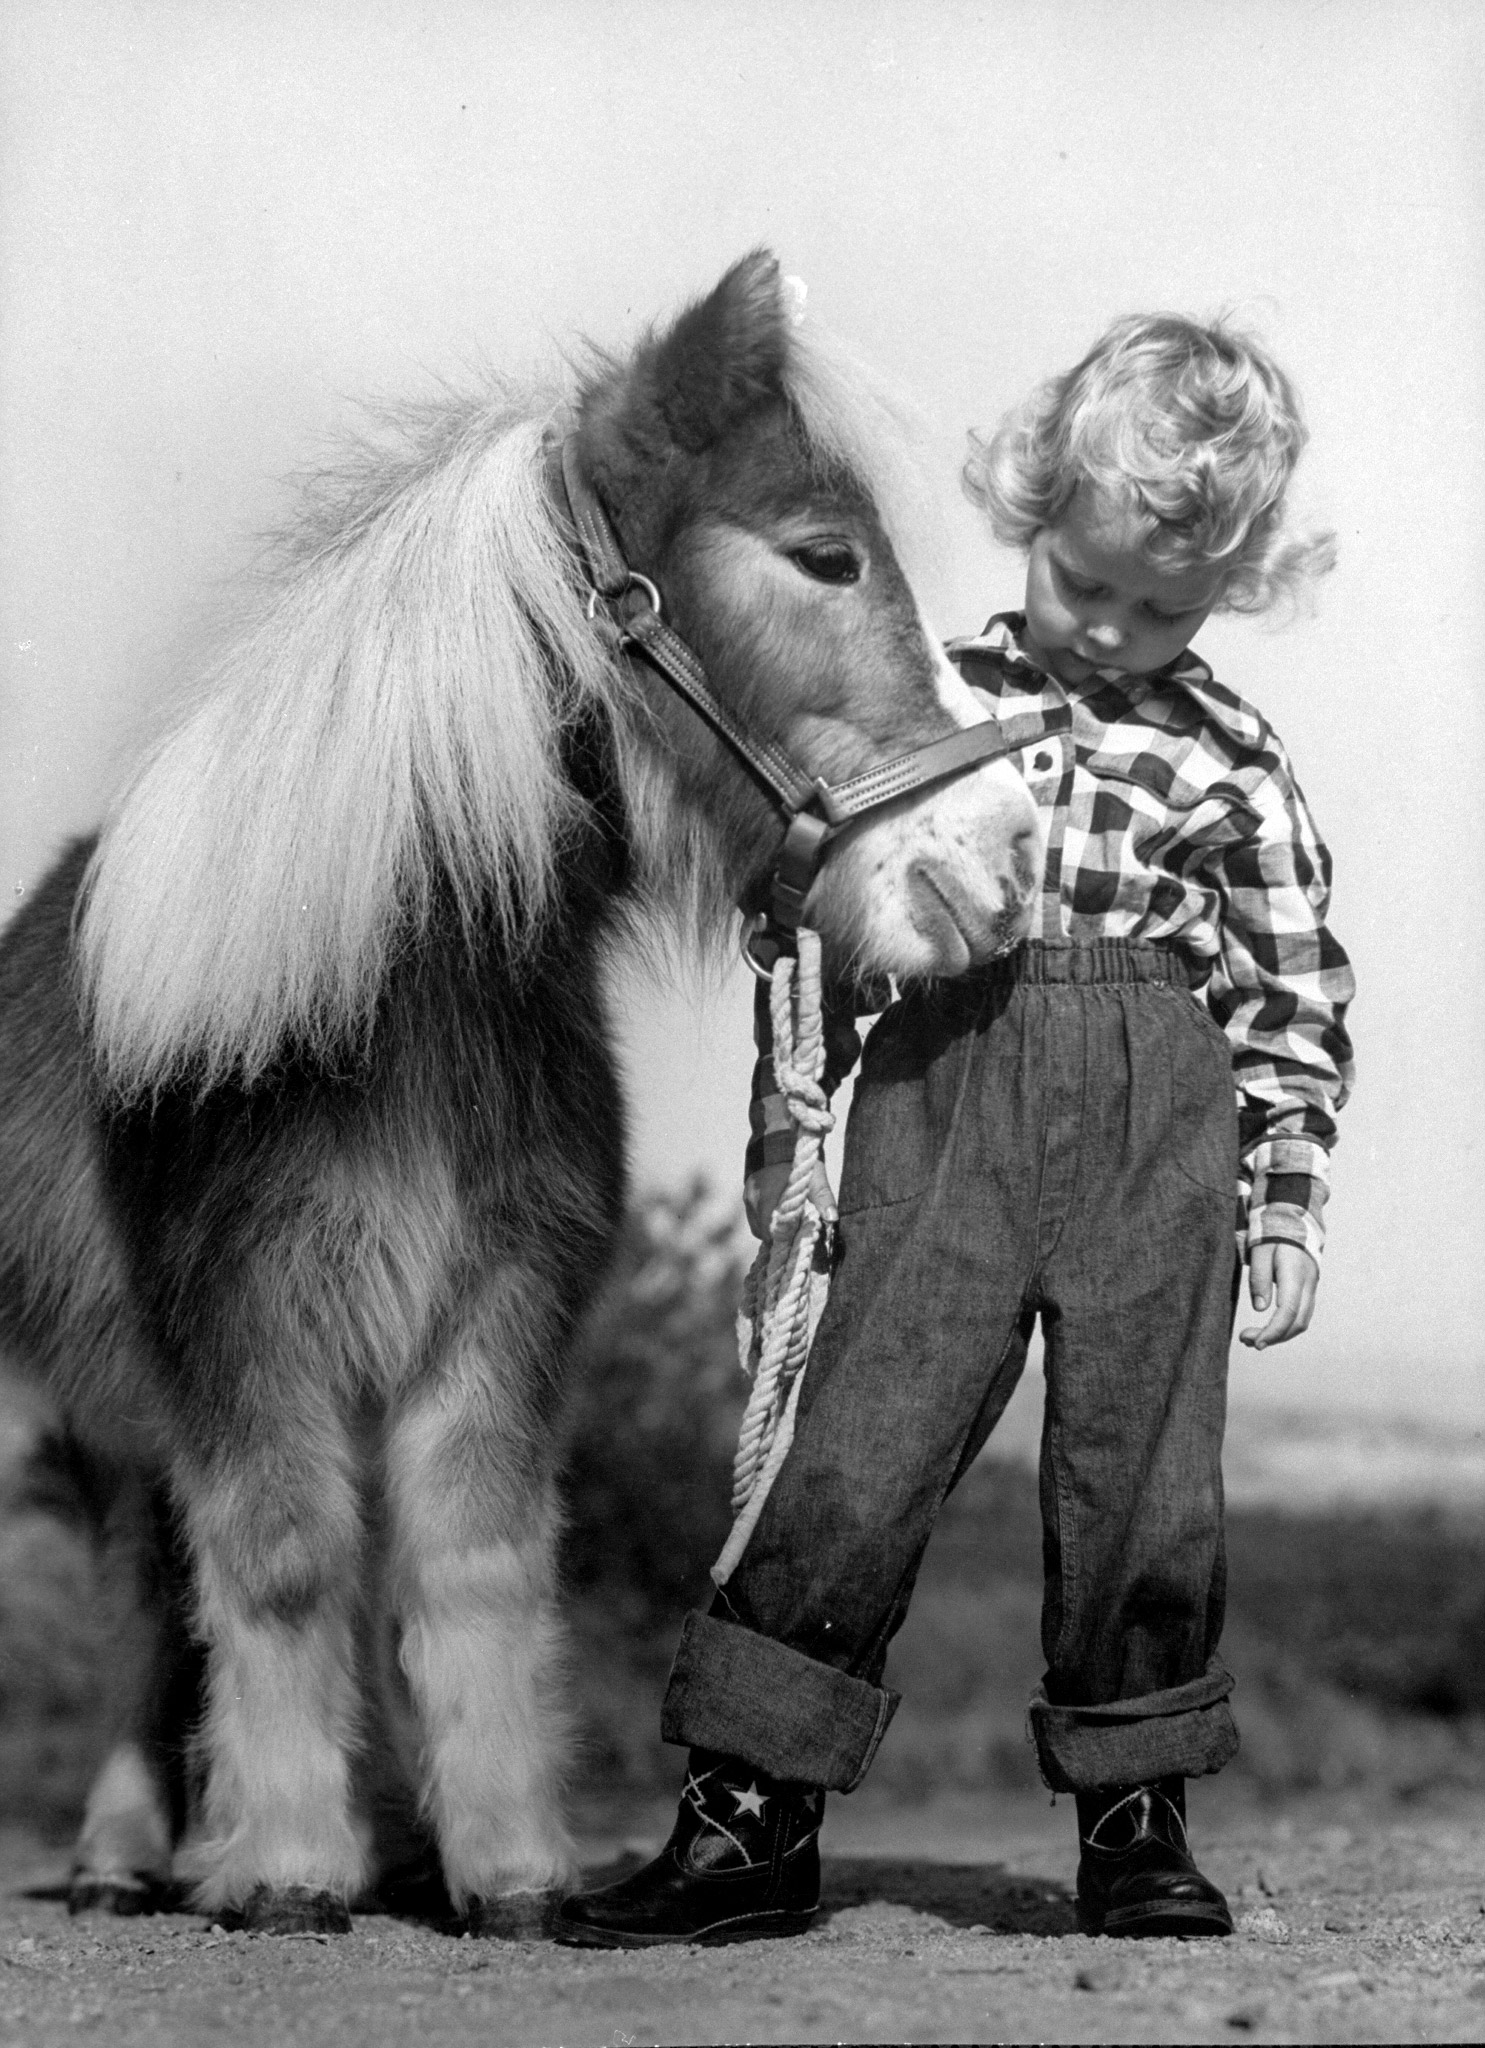 Child standing beside a miniature horse, showing size comparison, 1952.